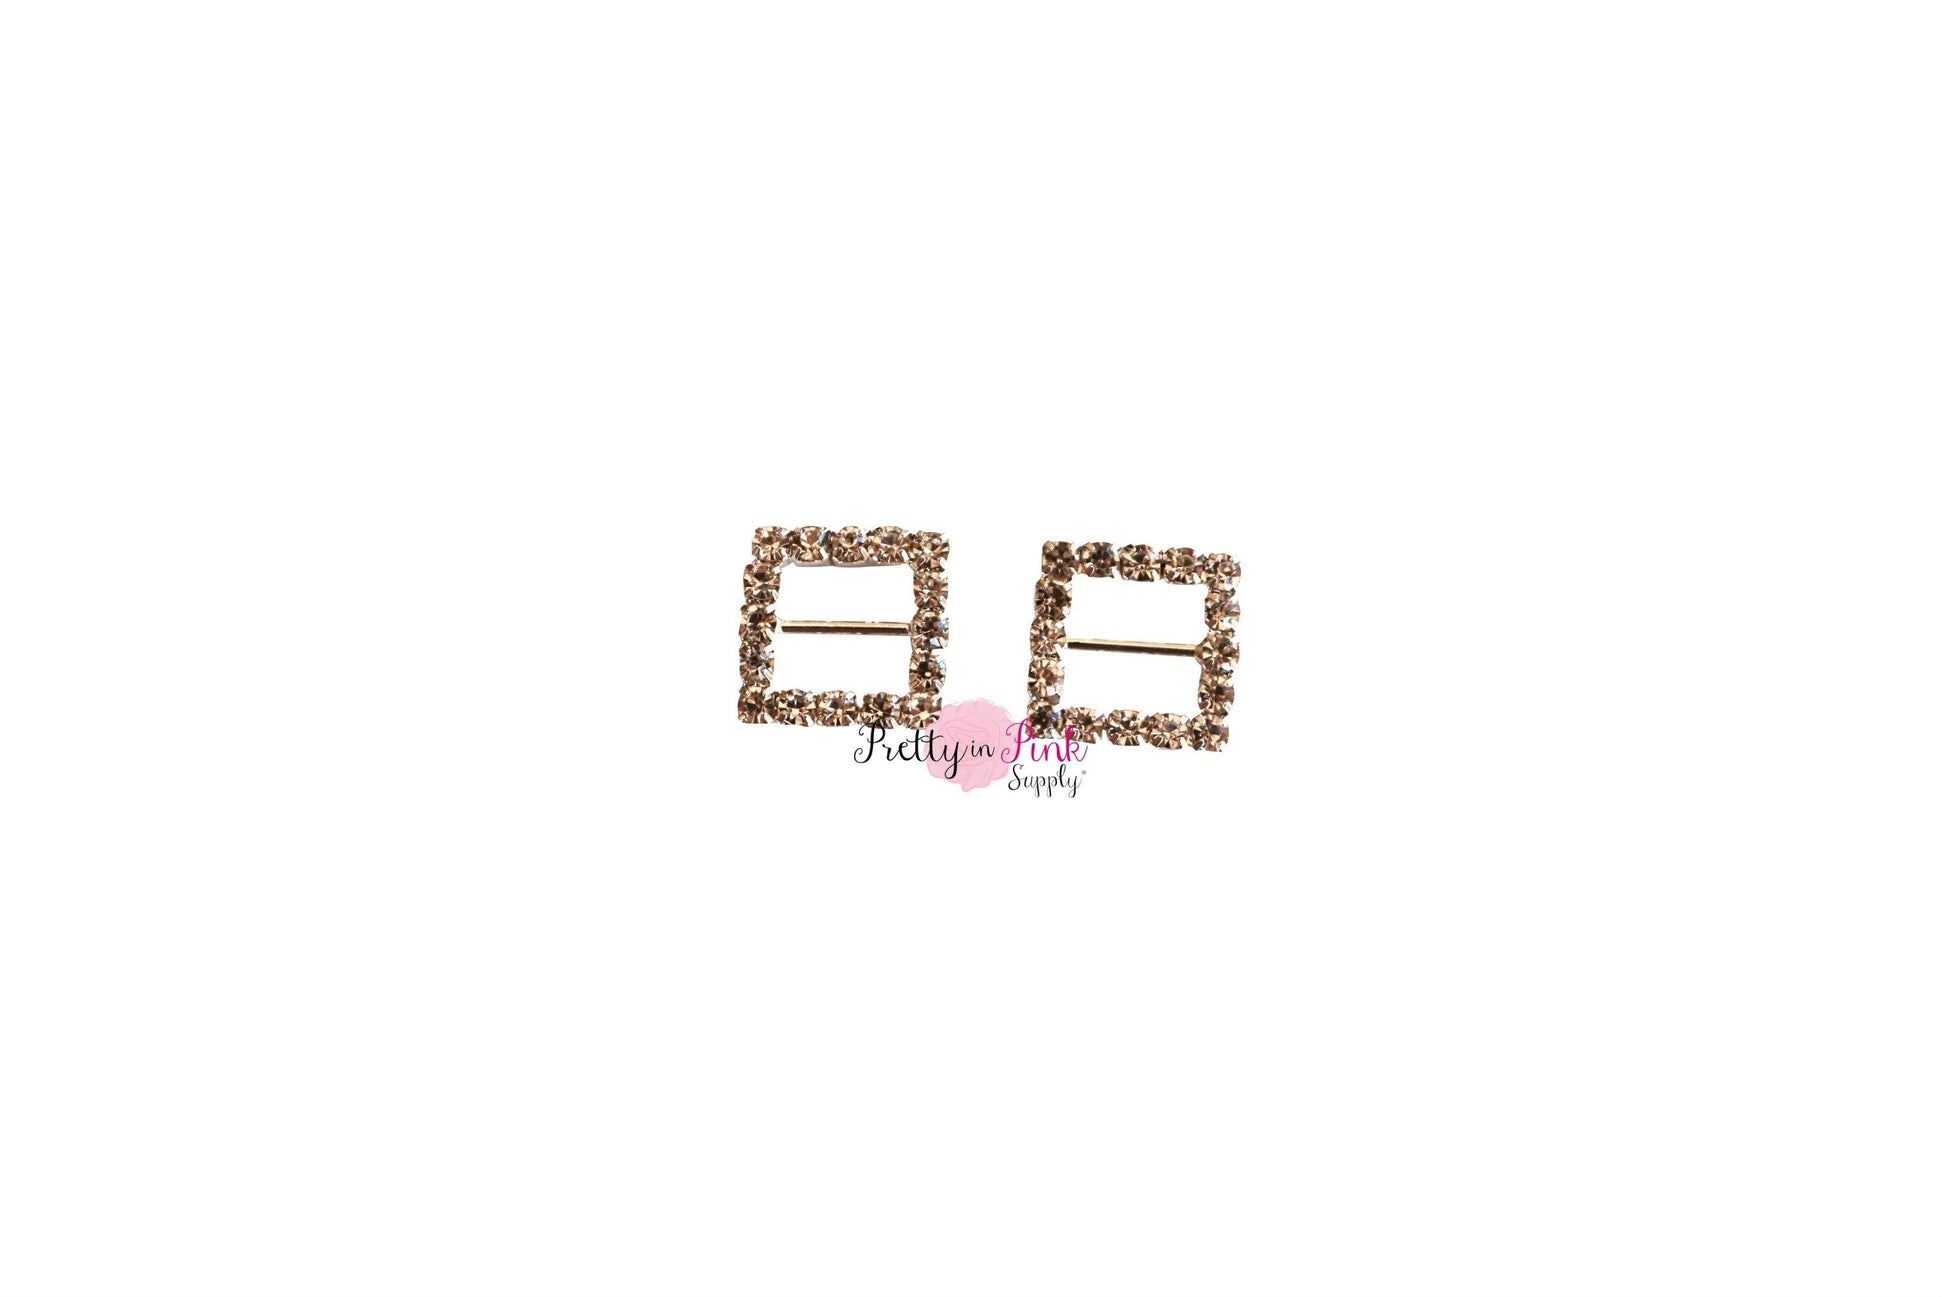 Square Crystal Rhinestone Slider Button - Pretty in Pink Supply